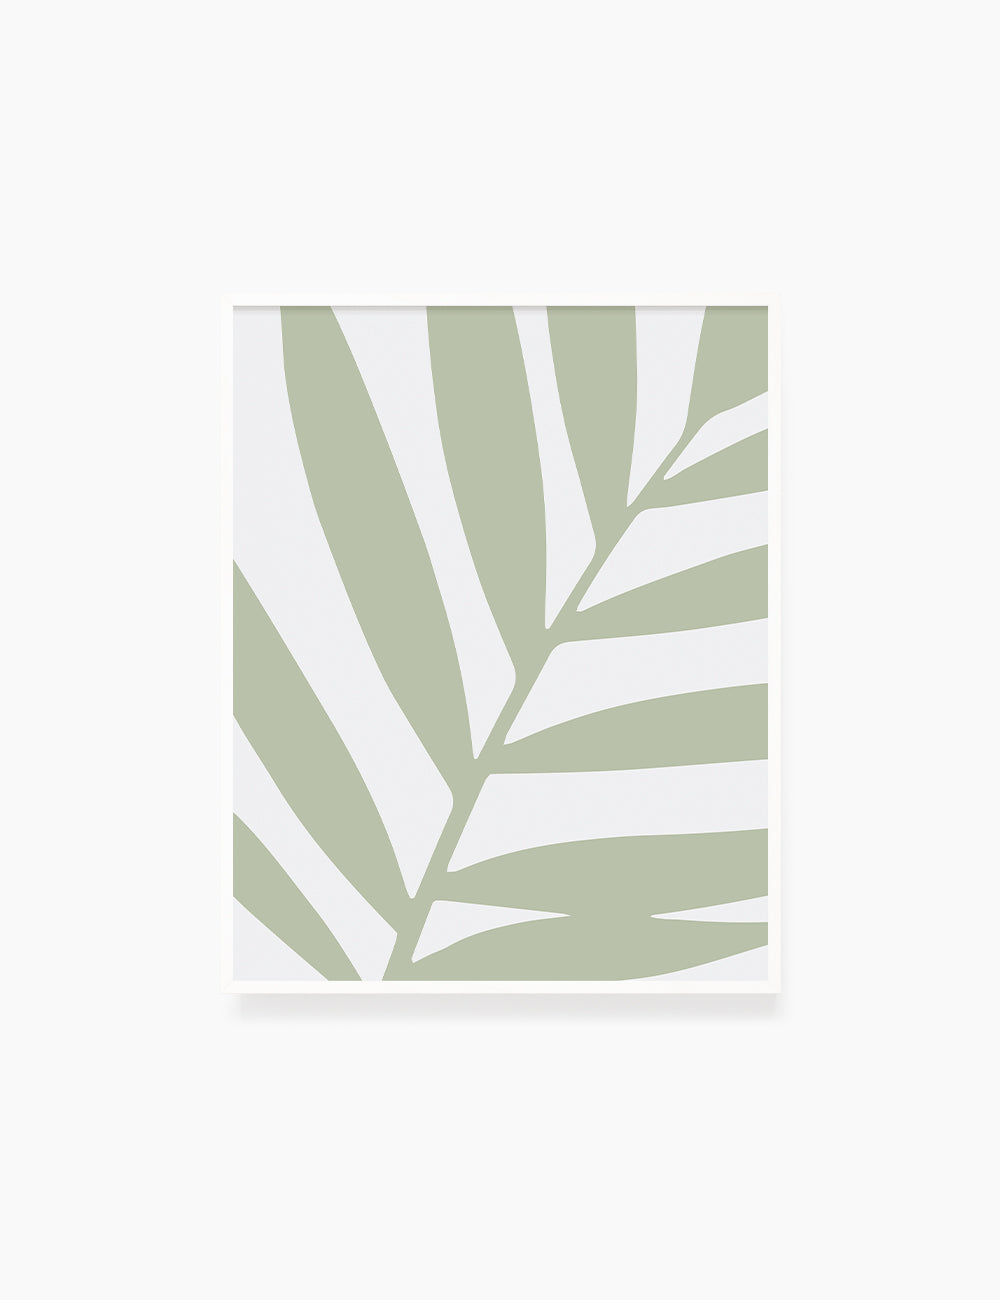 LEAF. MINIMALIST BOTANICAL BOHO ART. GREEN. Minimal Aesthetic. Clean Design. Printable Wall Art Illustration. - PAPER MOON Art & Design